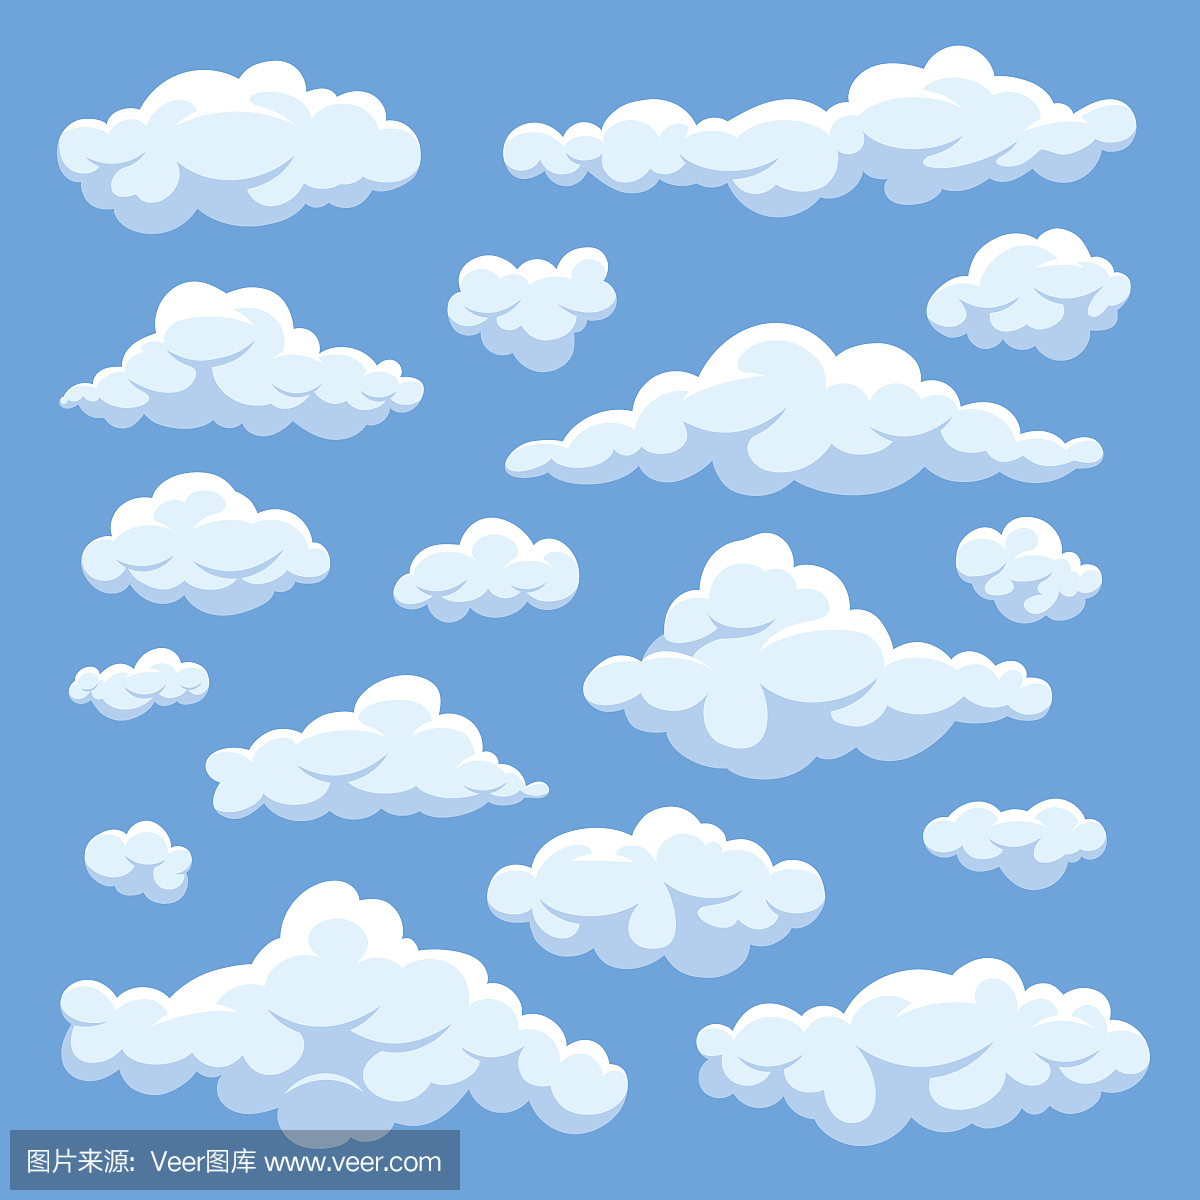 e cartoon clouds in blue sky vector set. Cloudy 